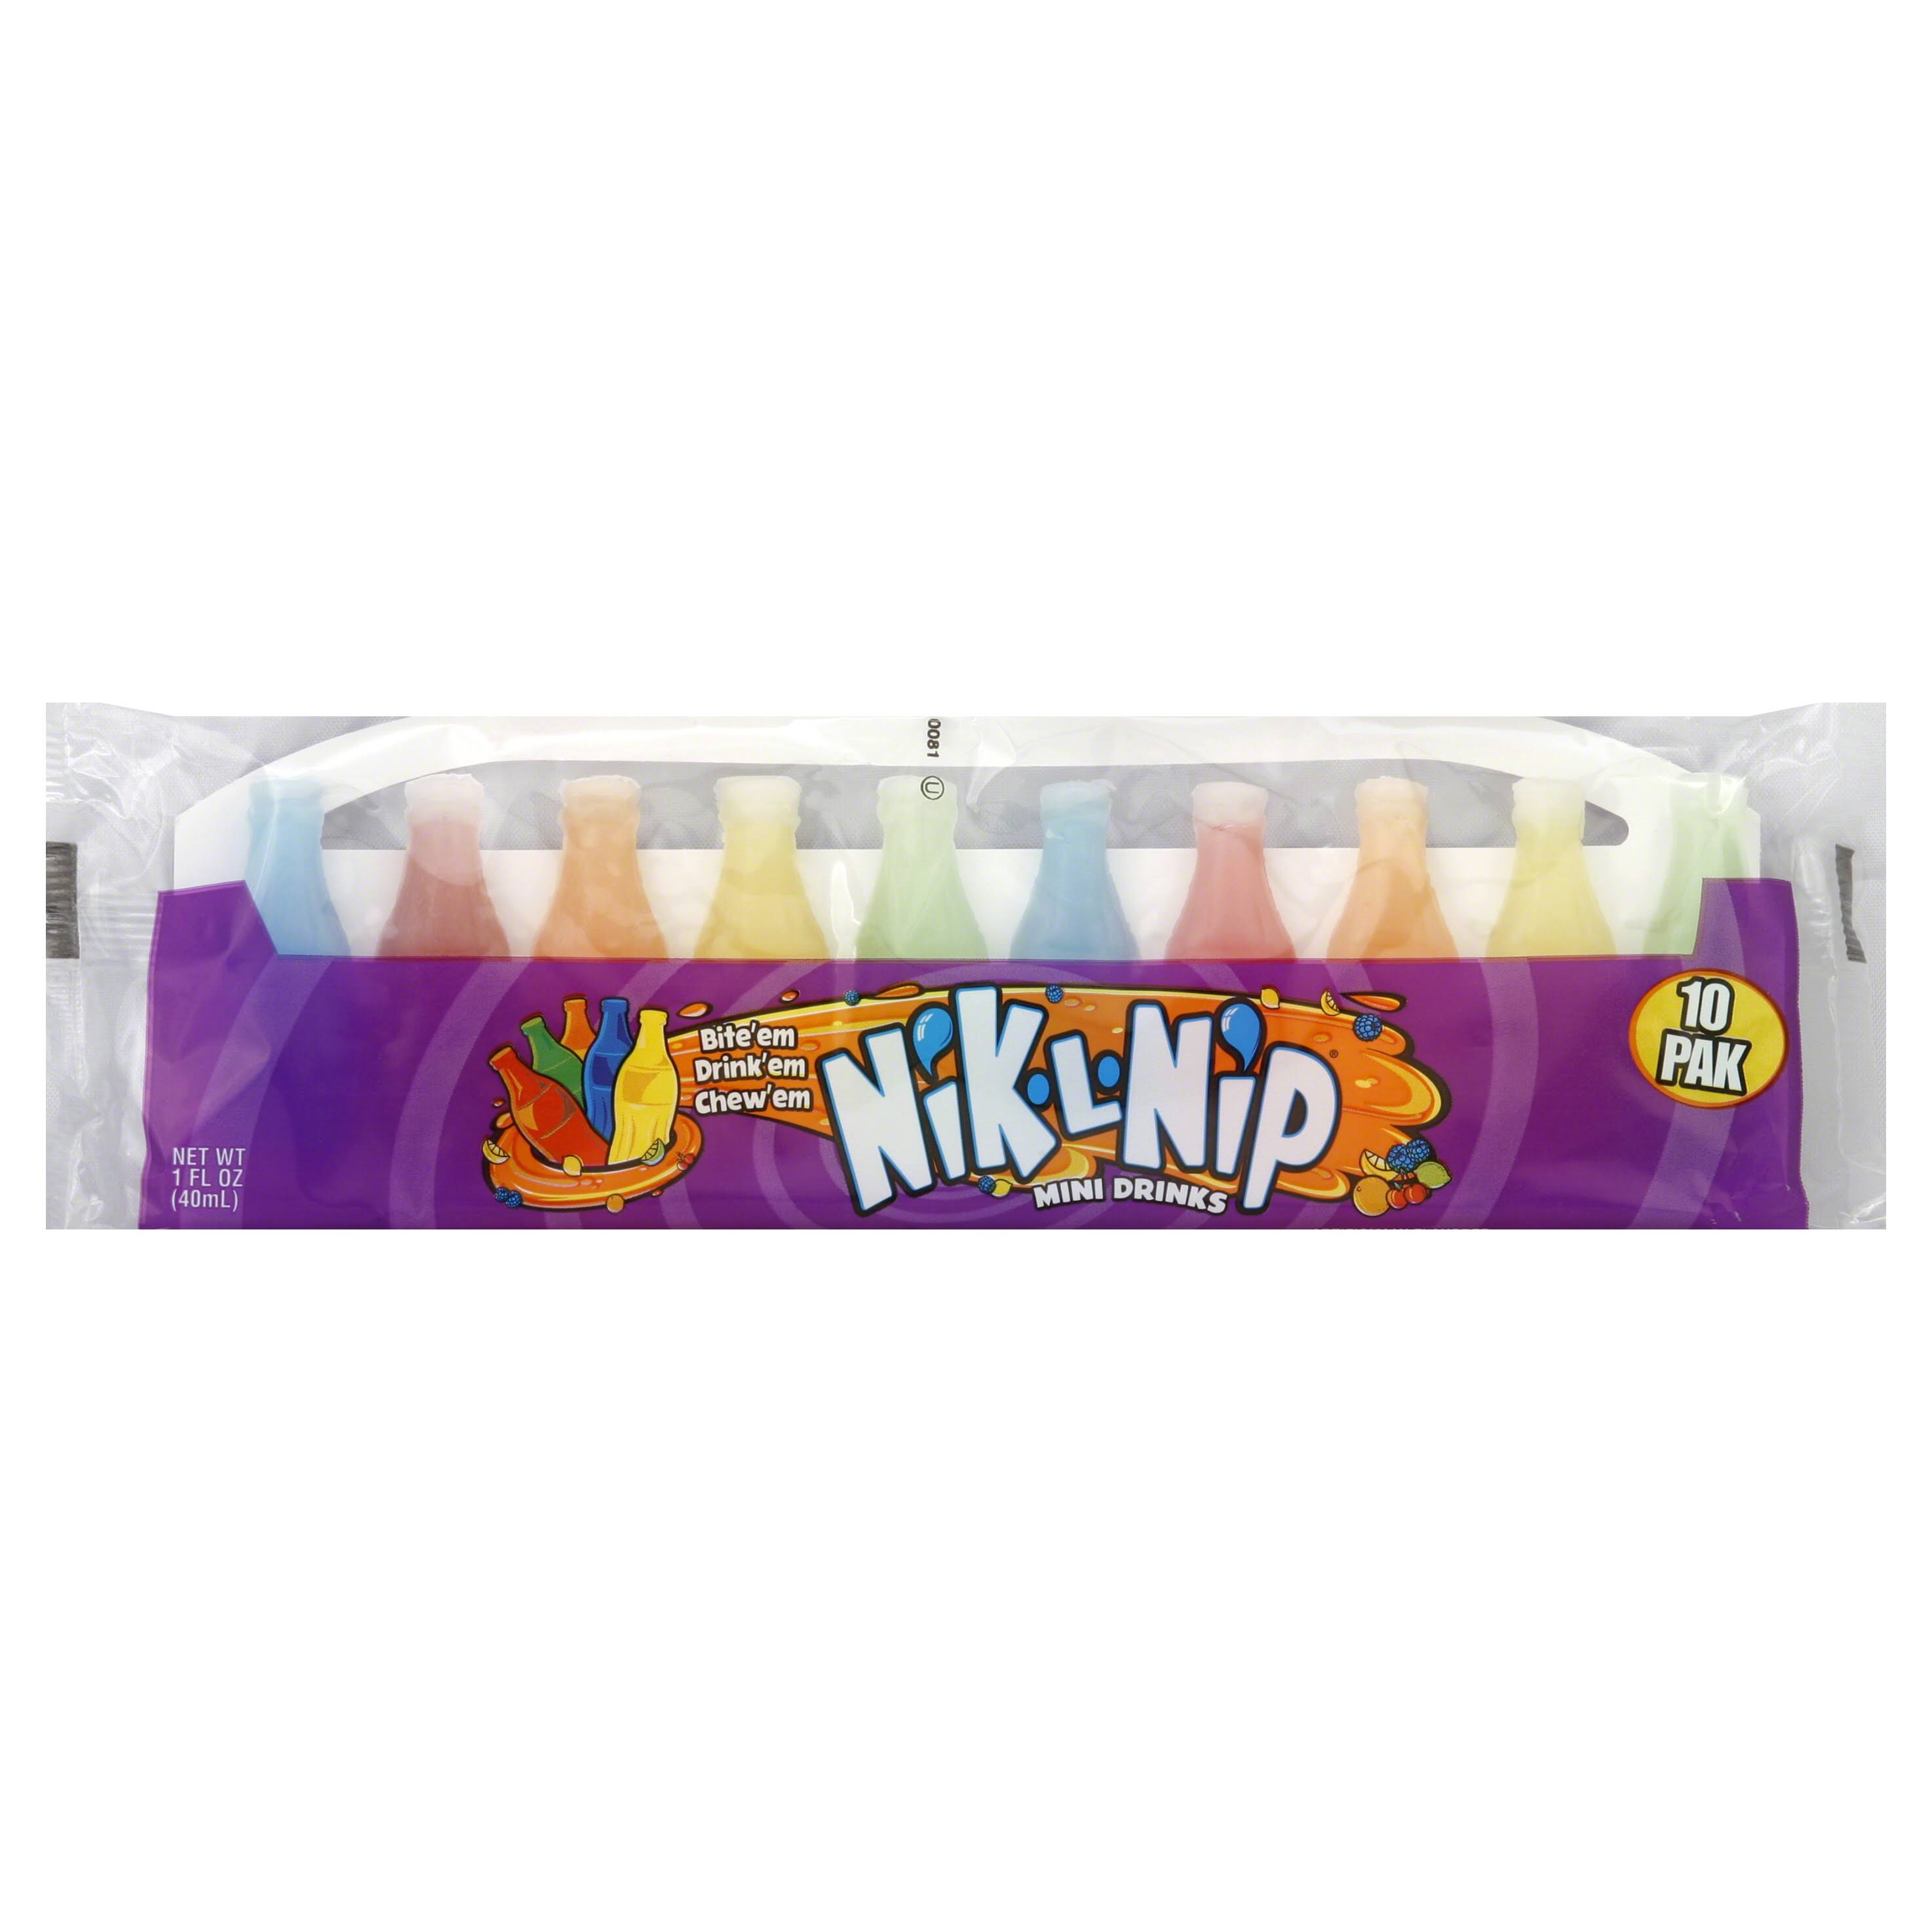 Nik L Nips Mini Drinks - 10 Pack, 3.4oz, 12 Pouches